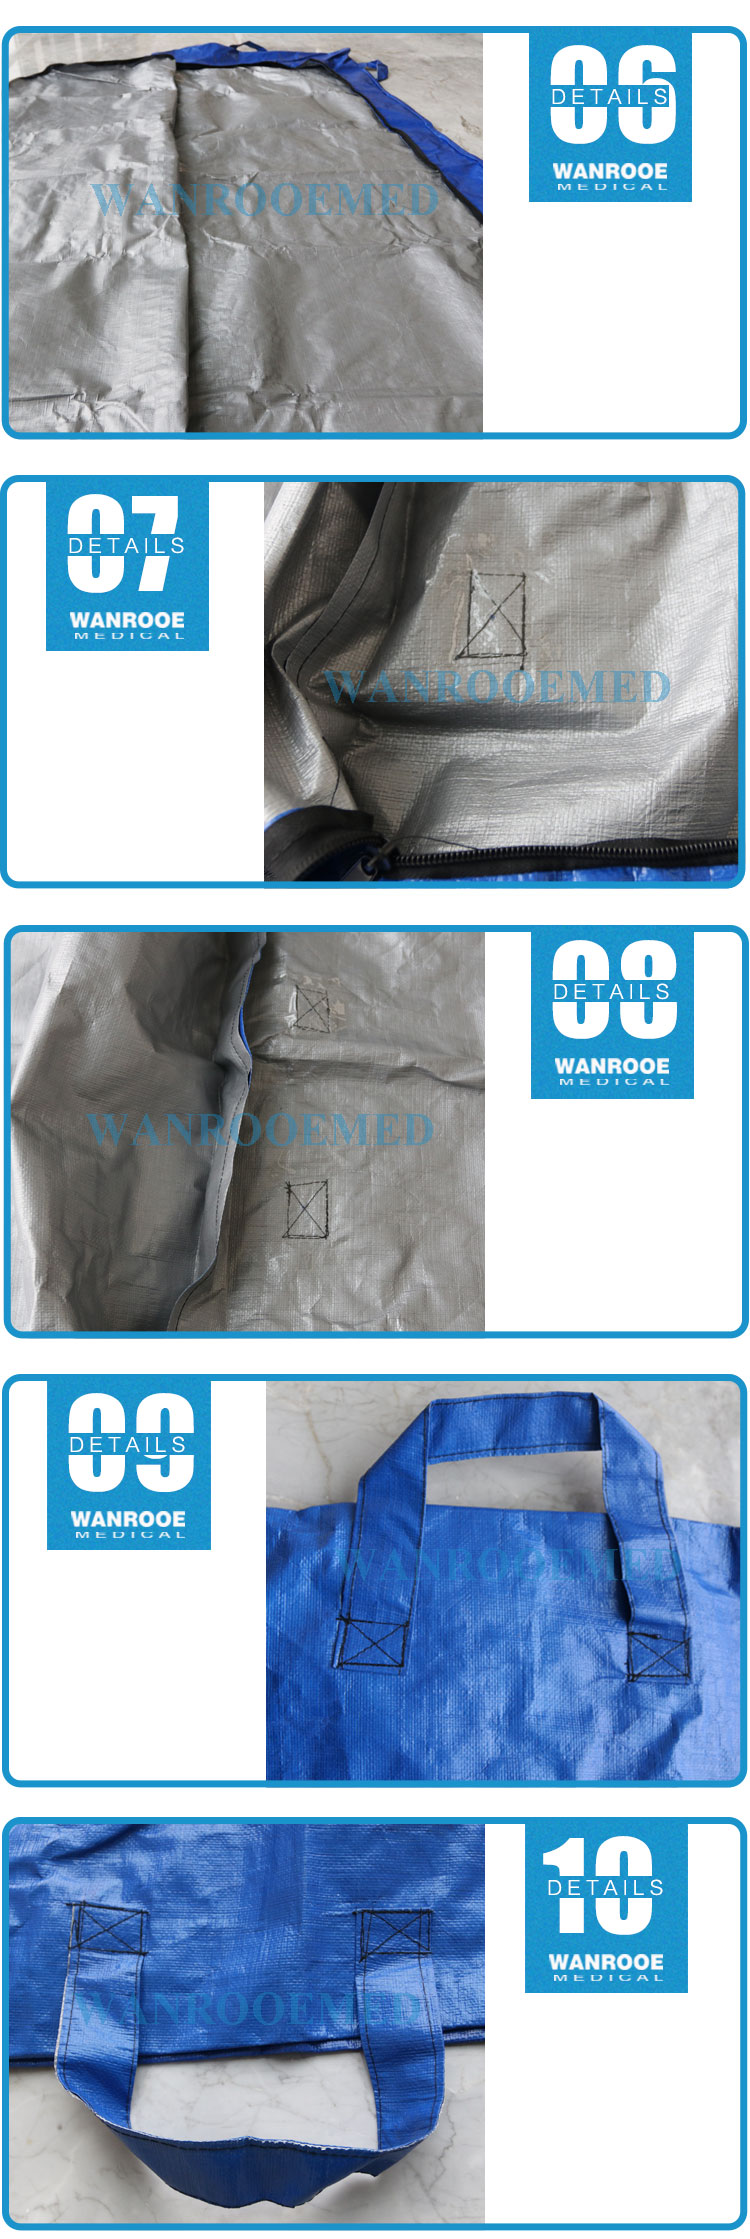 blue body bag,mortuary supplies body bags,human remains pouch,human body bag,mortuary body bags